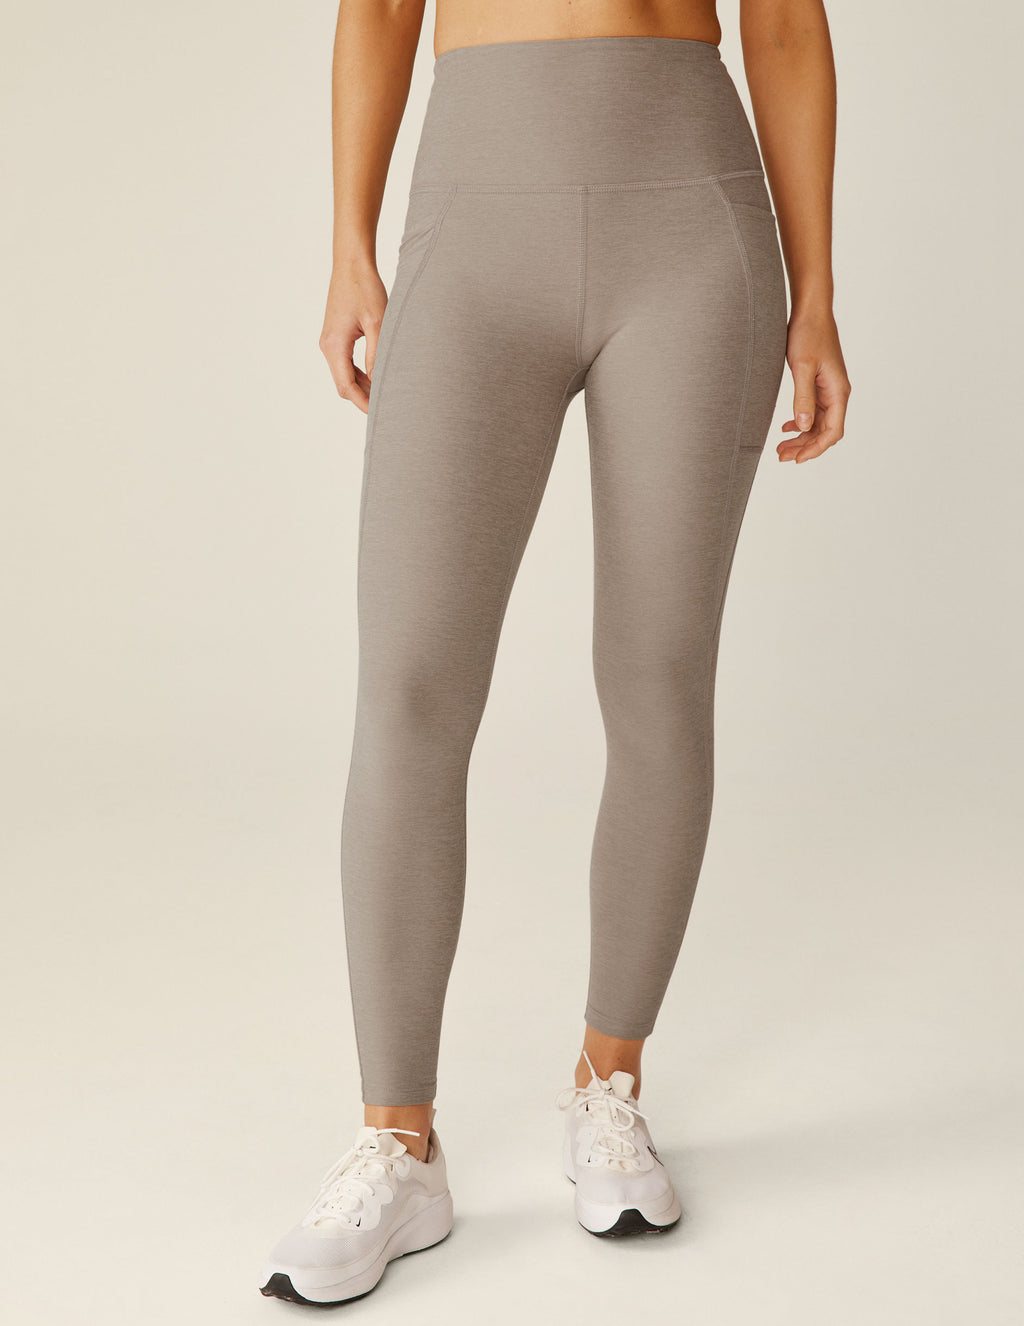 OUYISHANG Women's Shiny 7/8 Yoga Pants with Pockets High Waisted